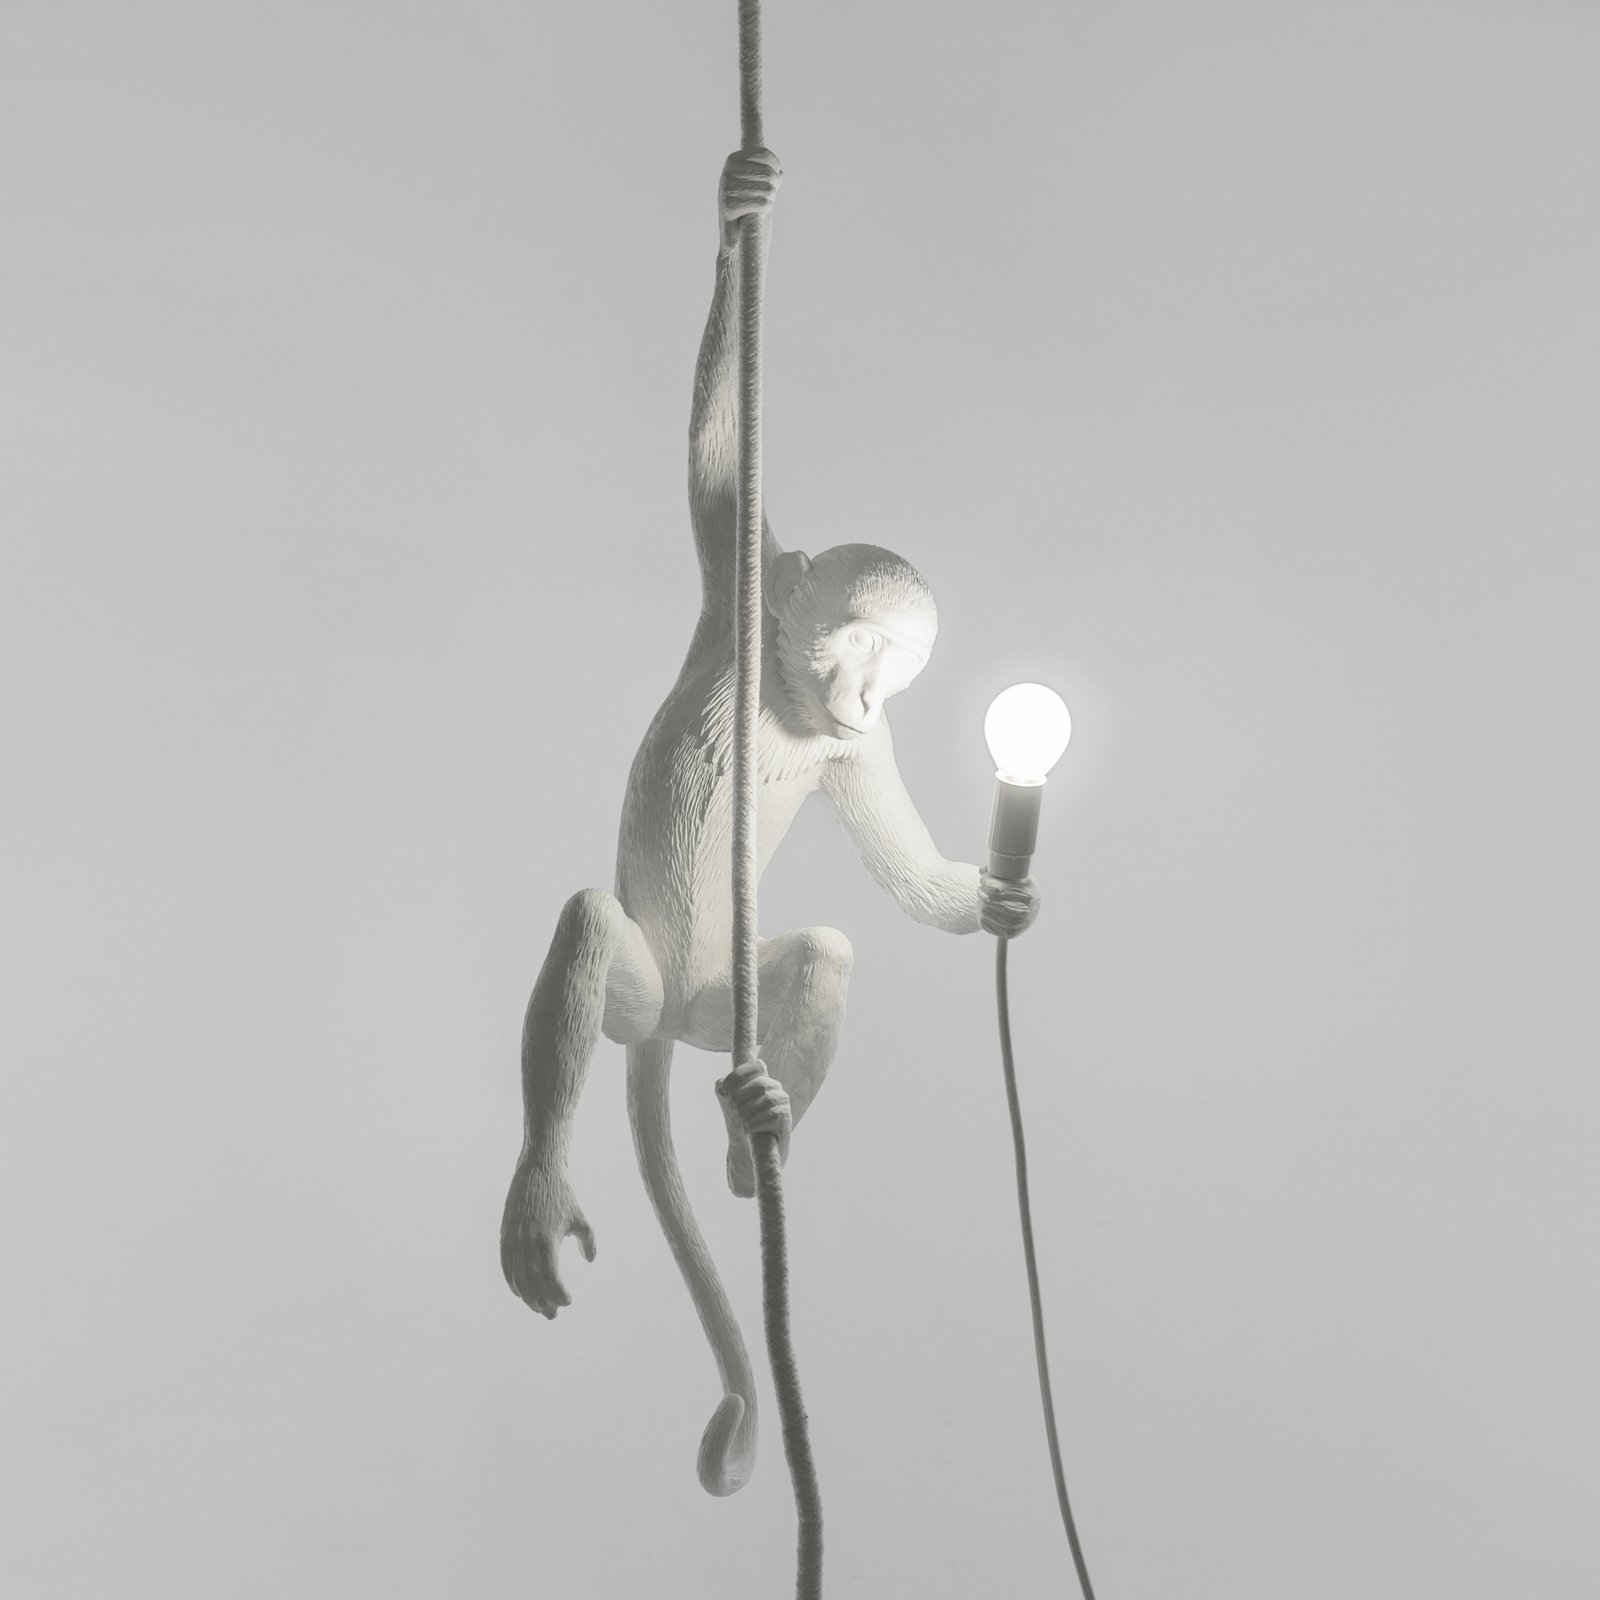 LED decoratie-hanglamp Monkey Lamp, wit, hangend